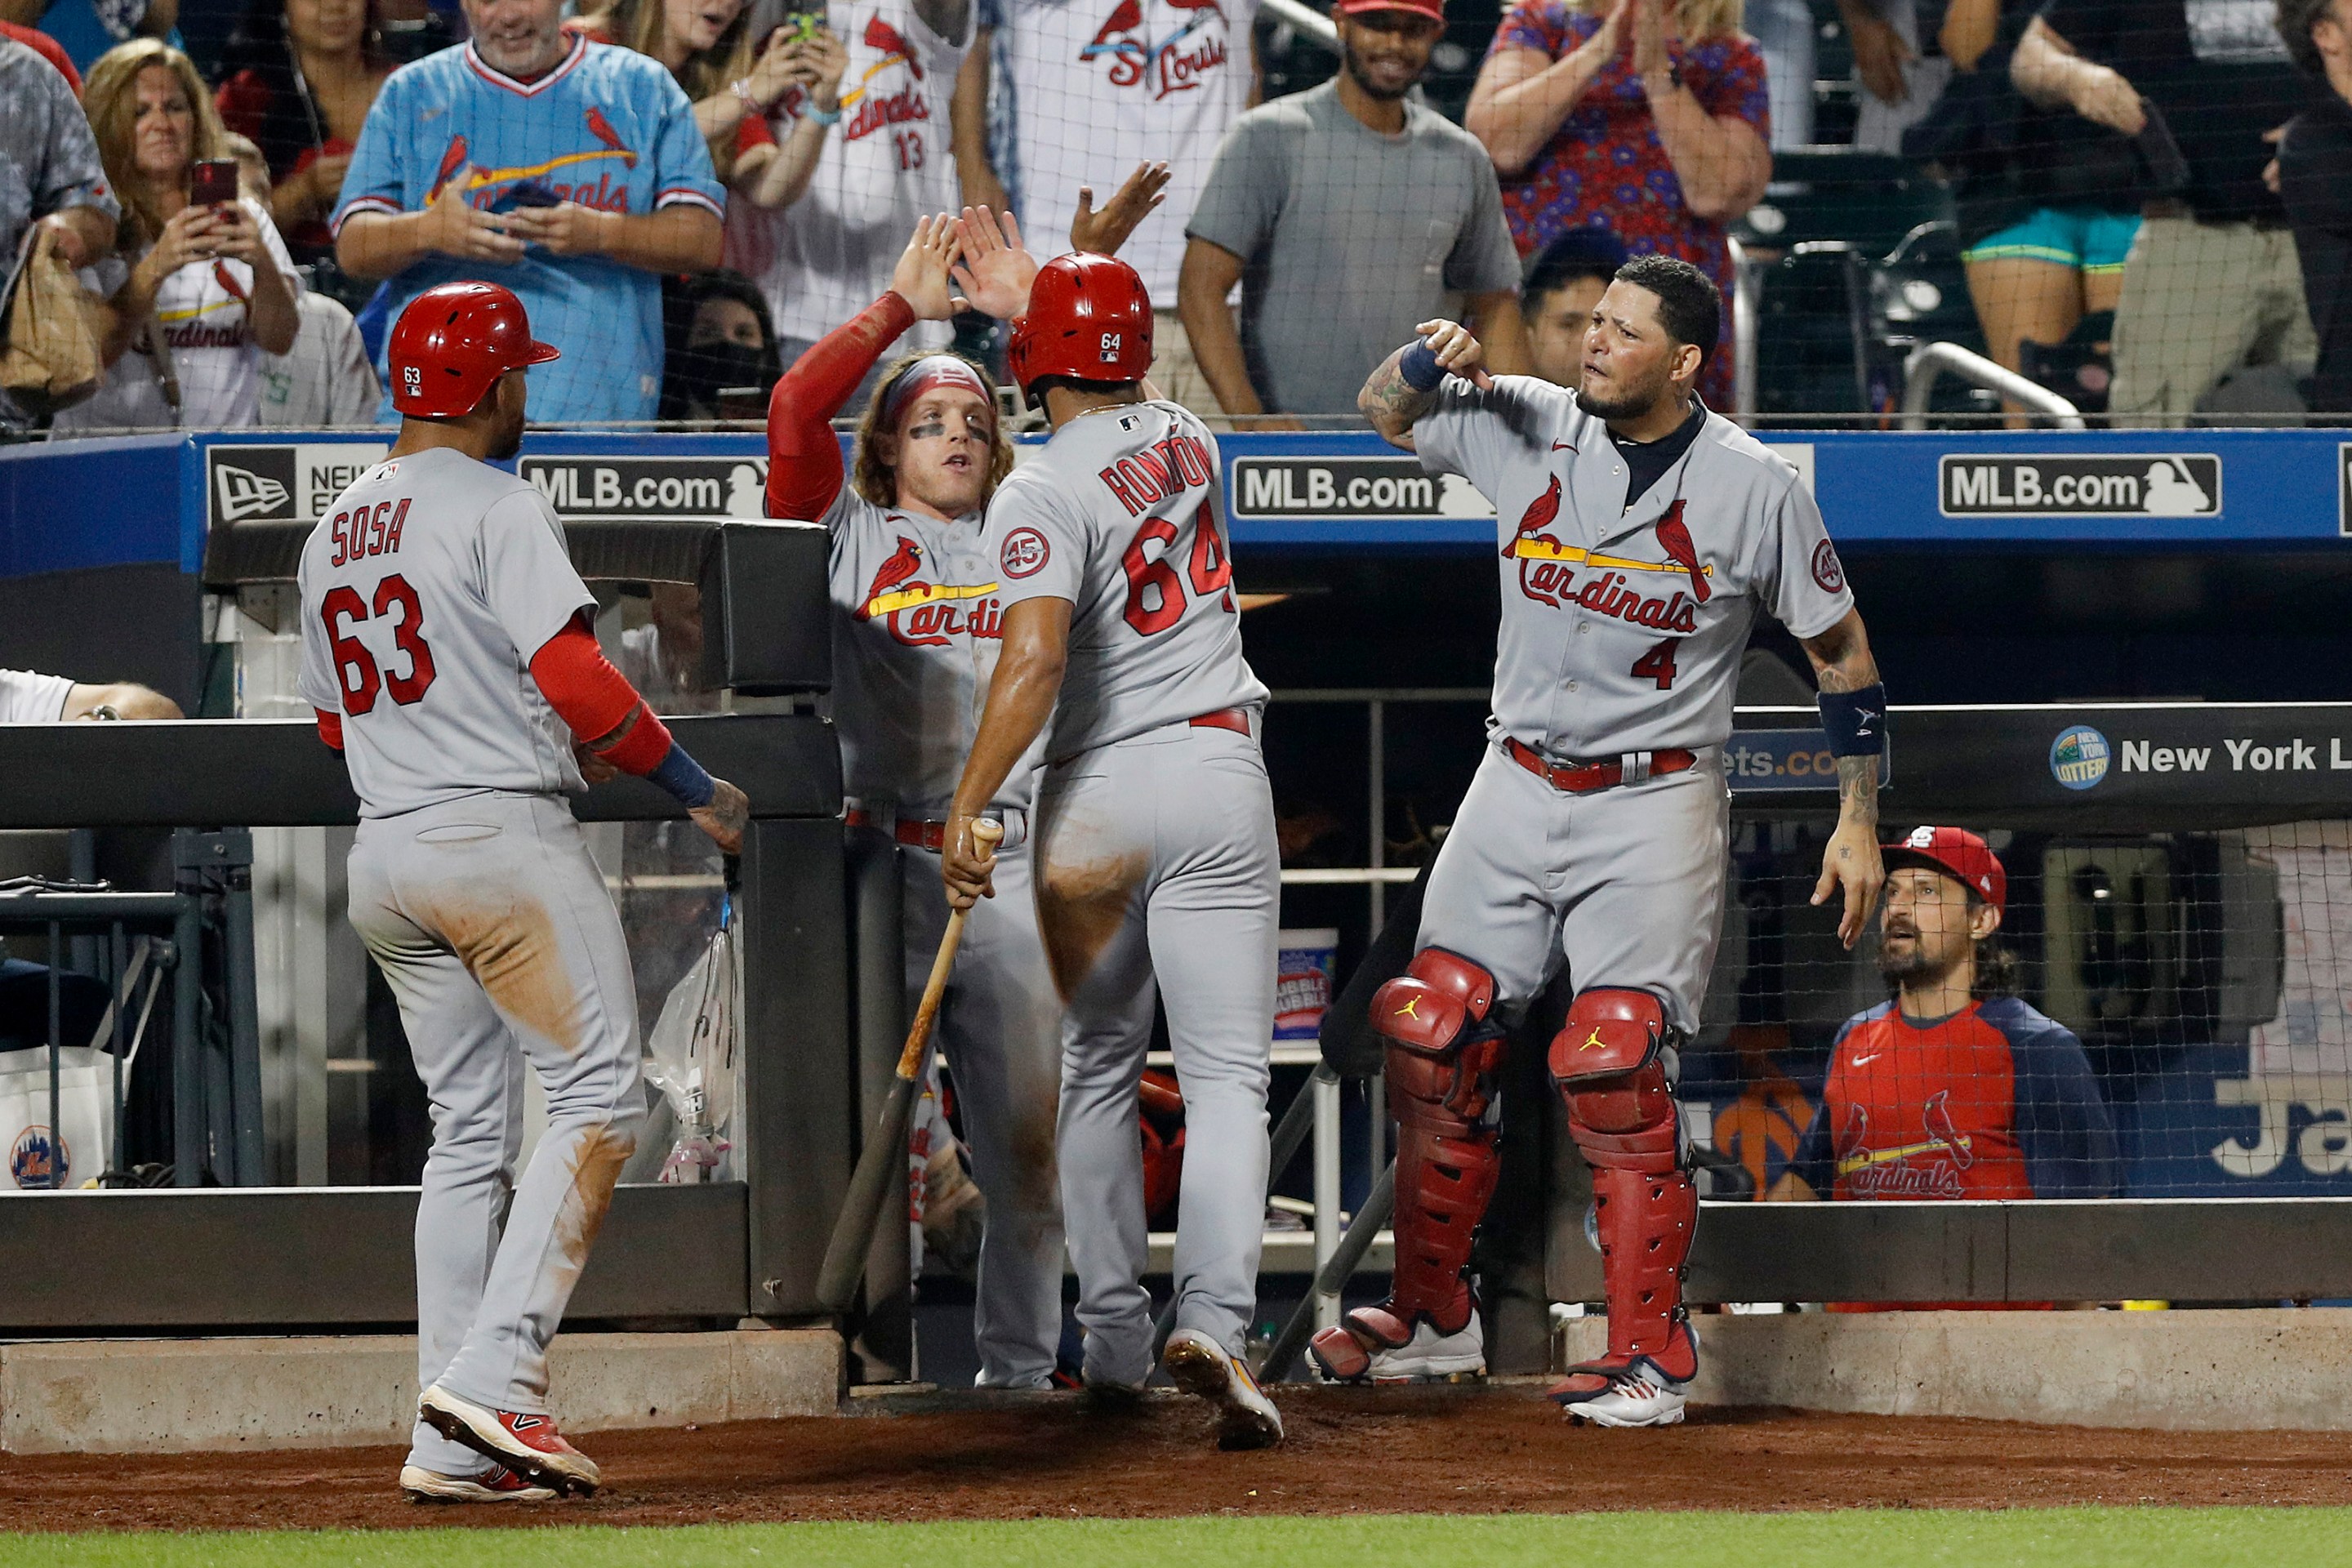 The Cardinals celebrate after scoring